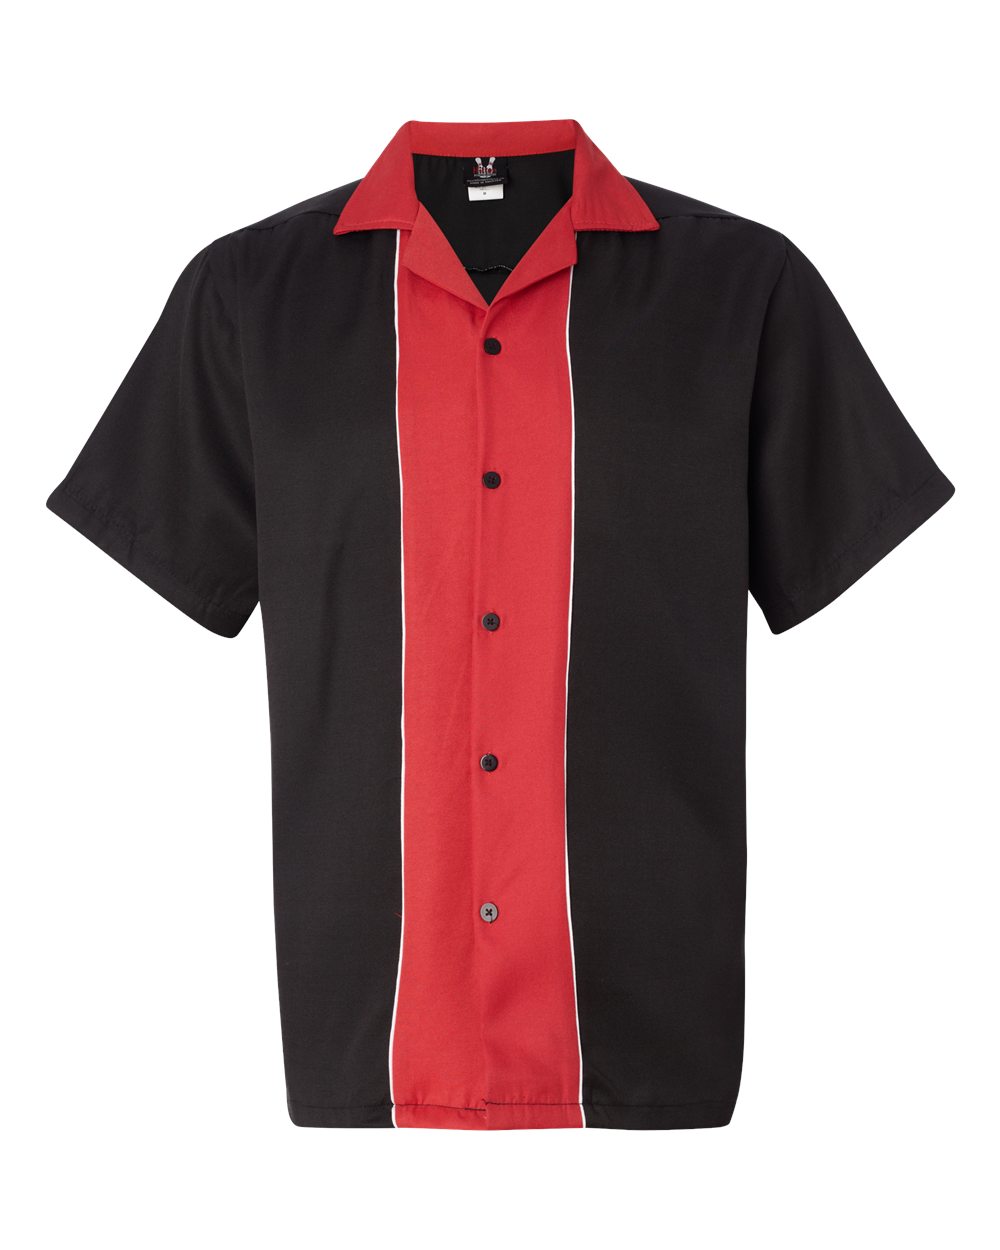 Hilton HP 2246-Quest Bowling Shirt